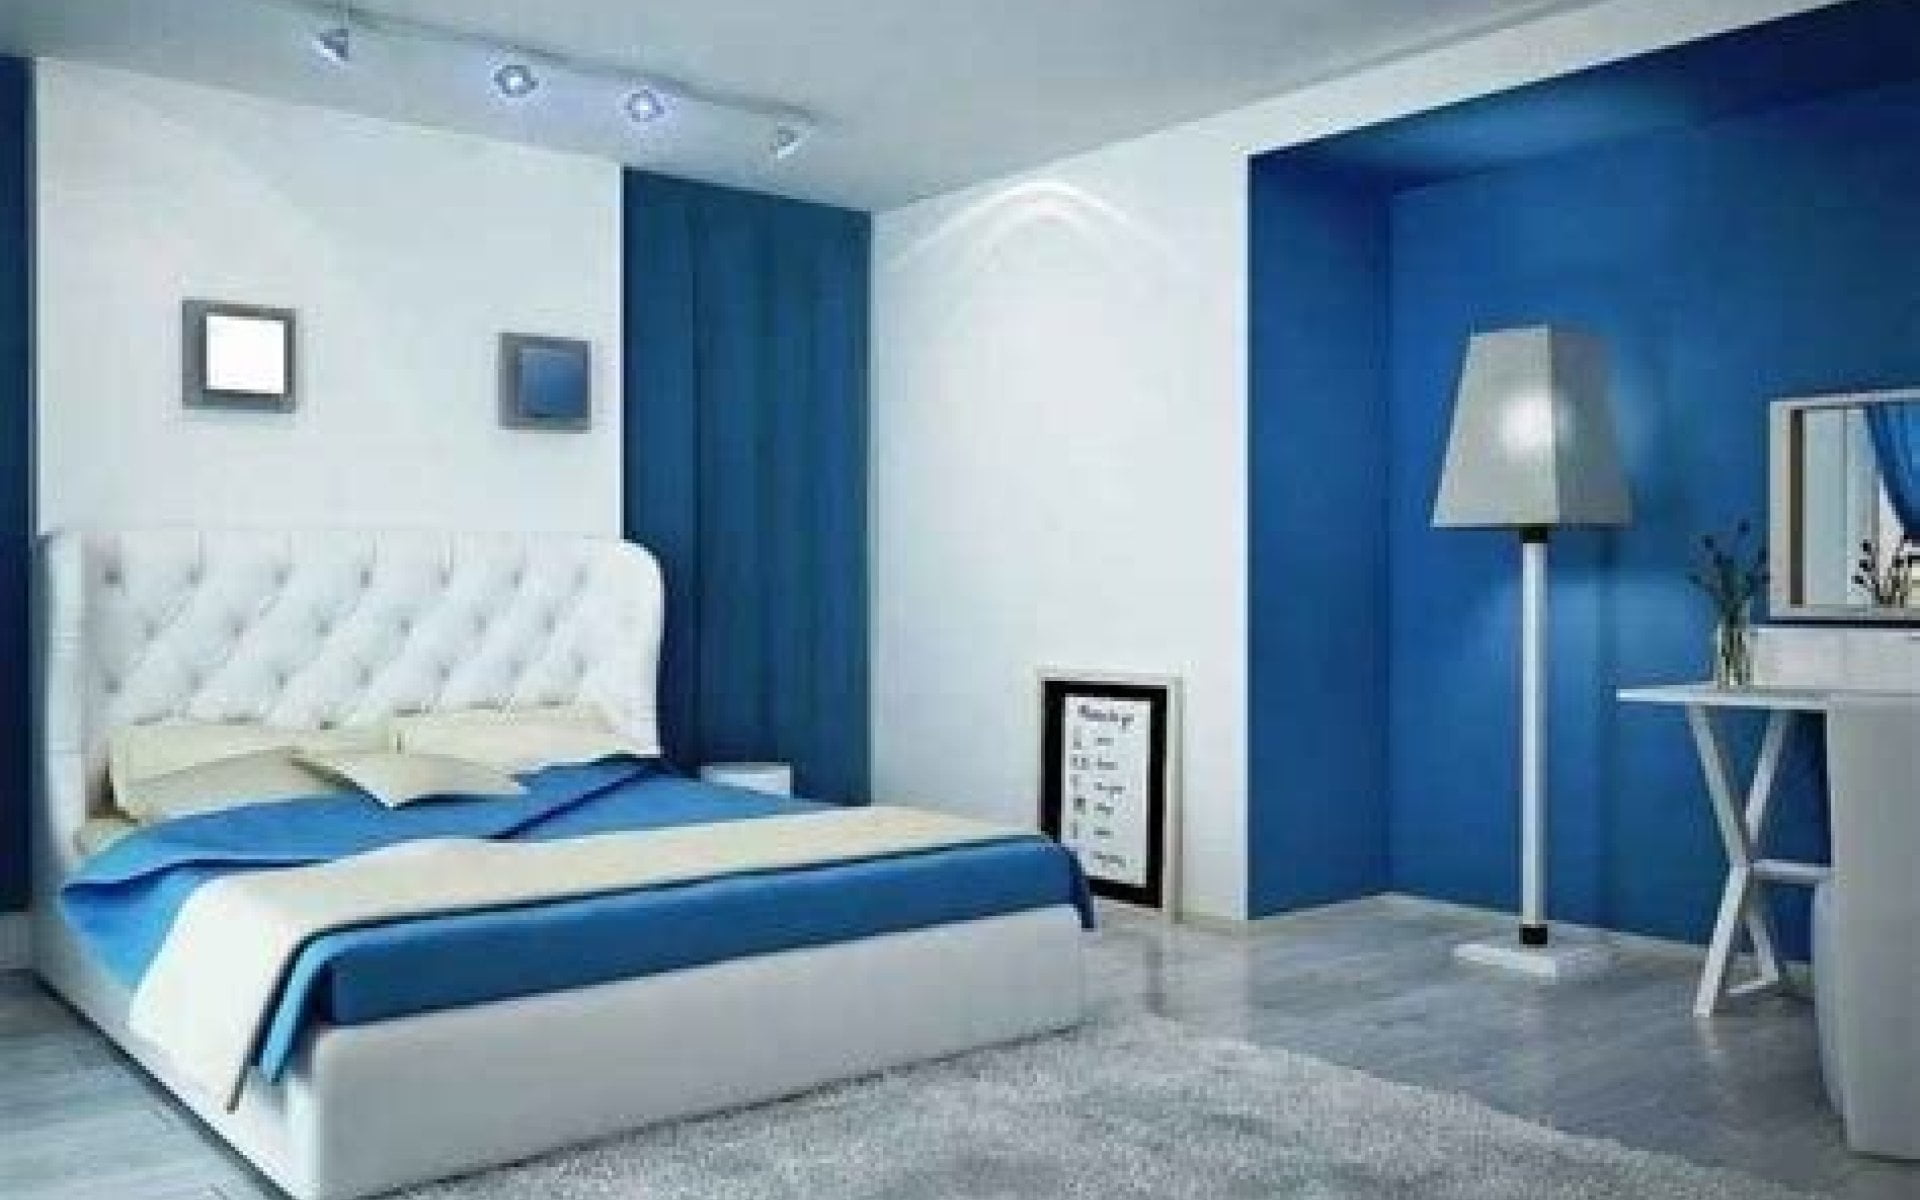 23 Gambar Dekorasi Kamar Tidur Minimalis Warna Biru Paling Banyak di Cari